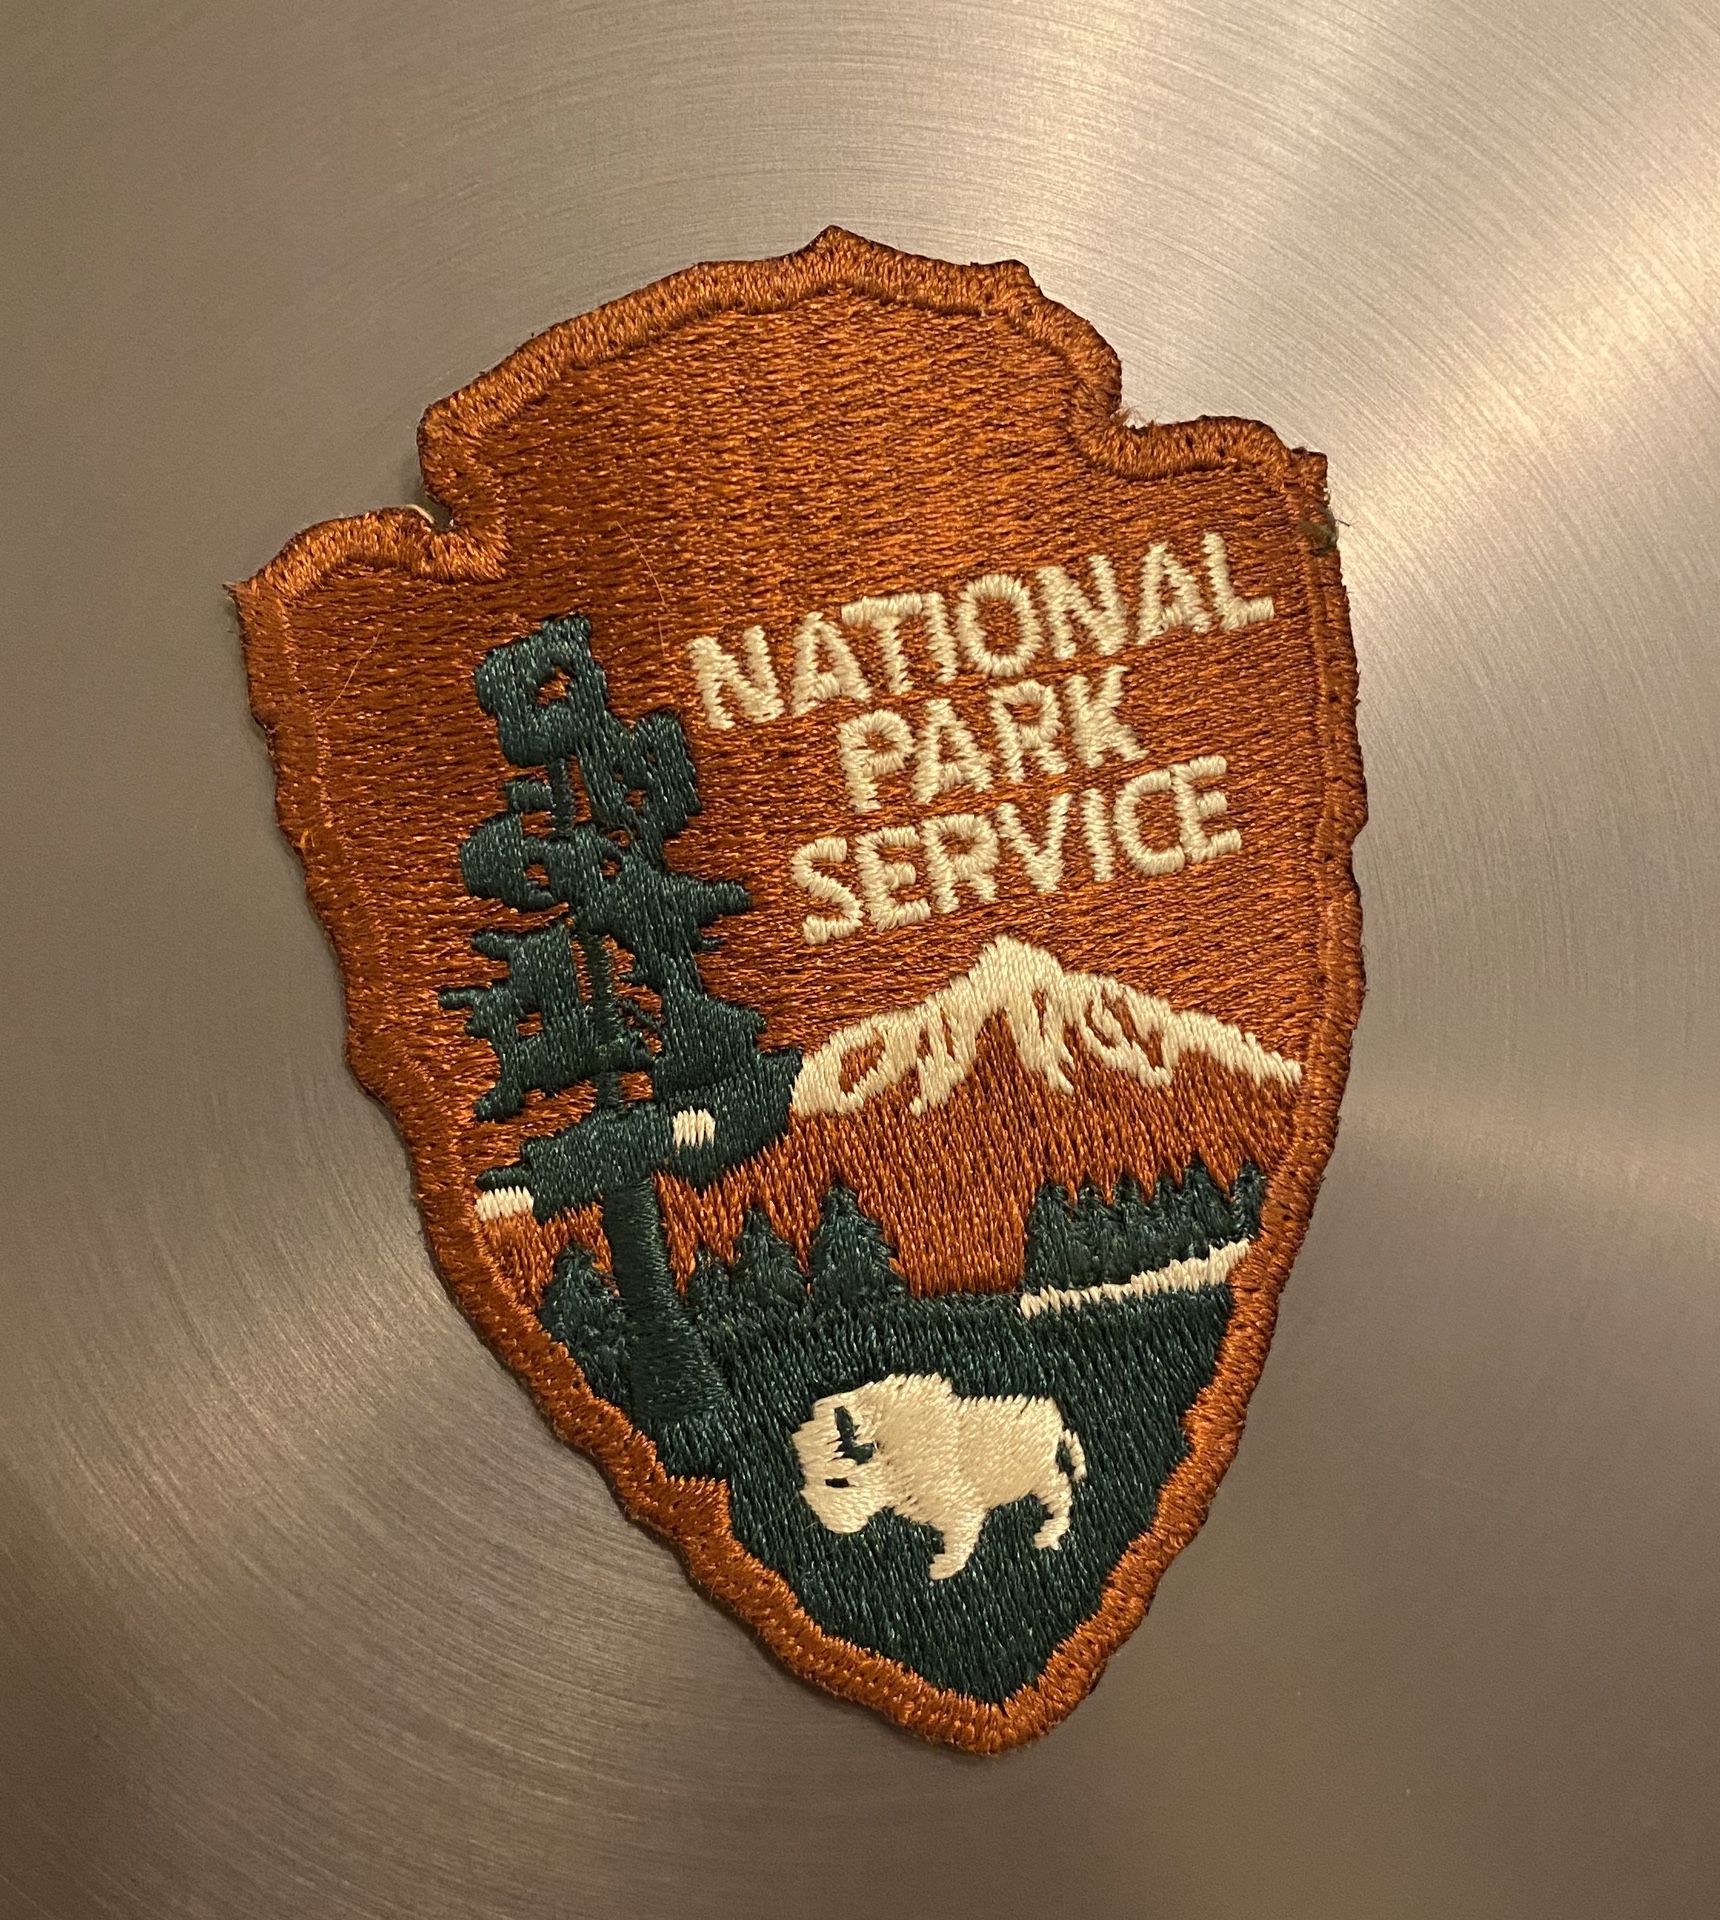 Vintage national park service patch